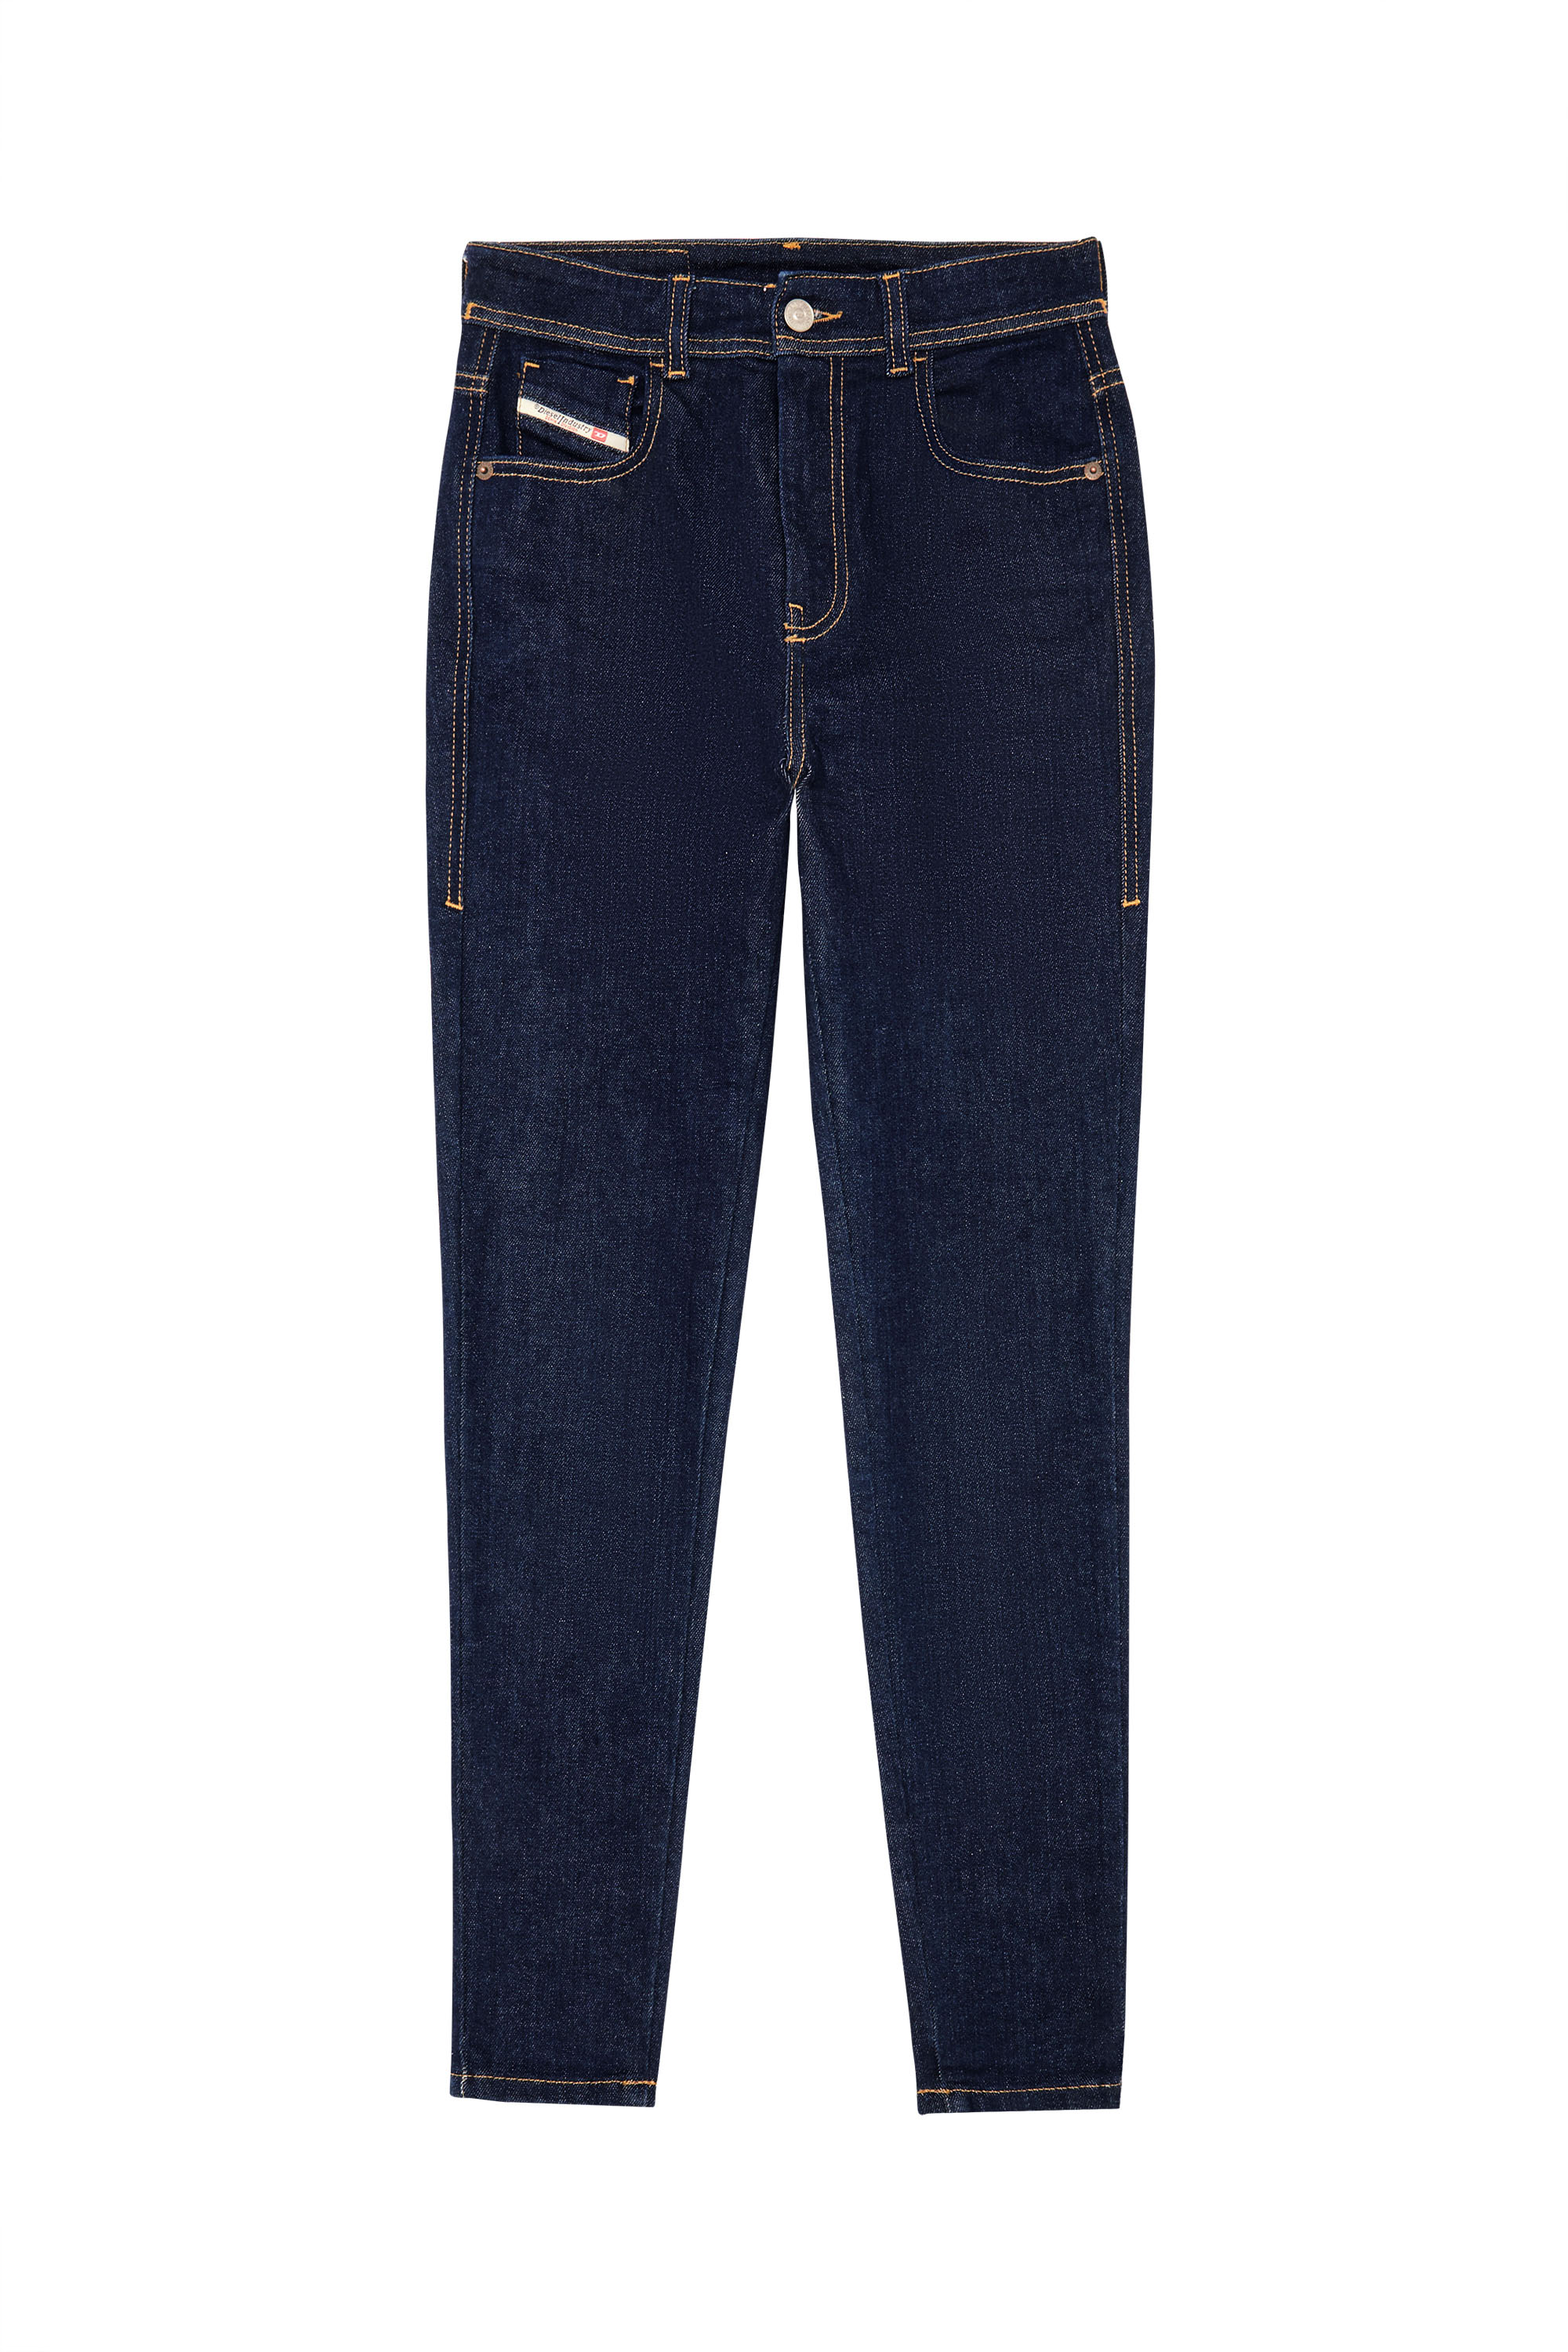 1984 SLANDY-HIGH Z9C18 Super skinny Jeans, Dunkelblau - Jeans